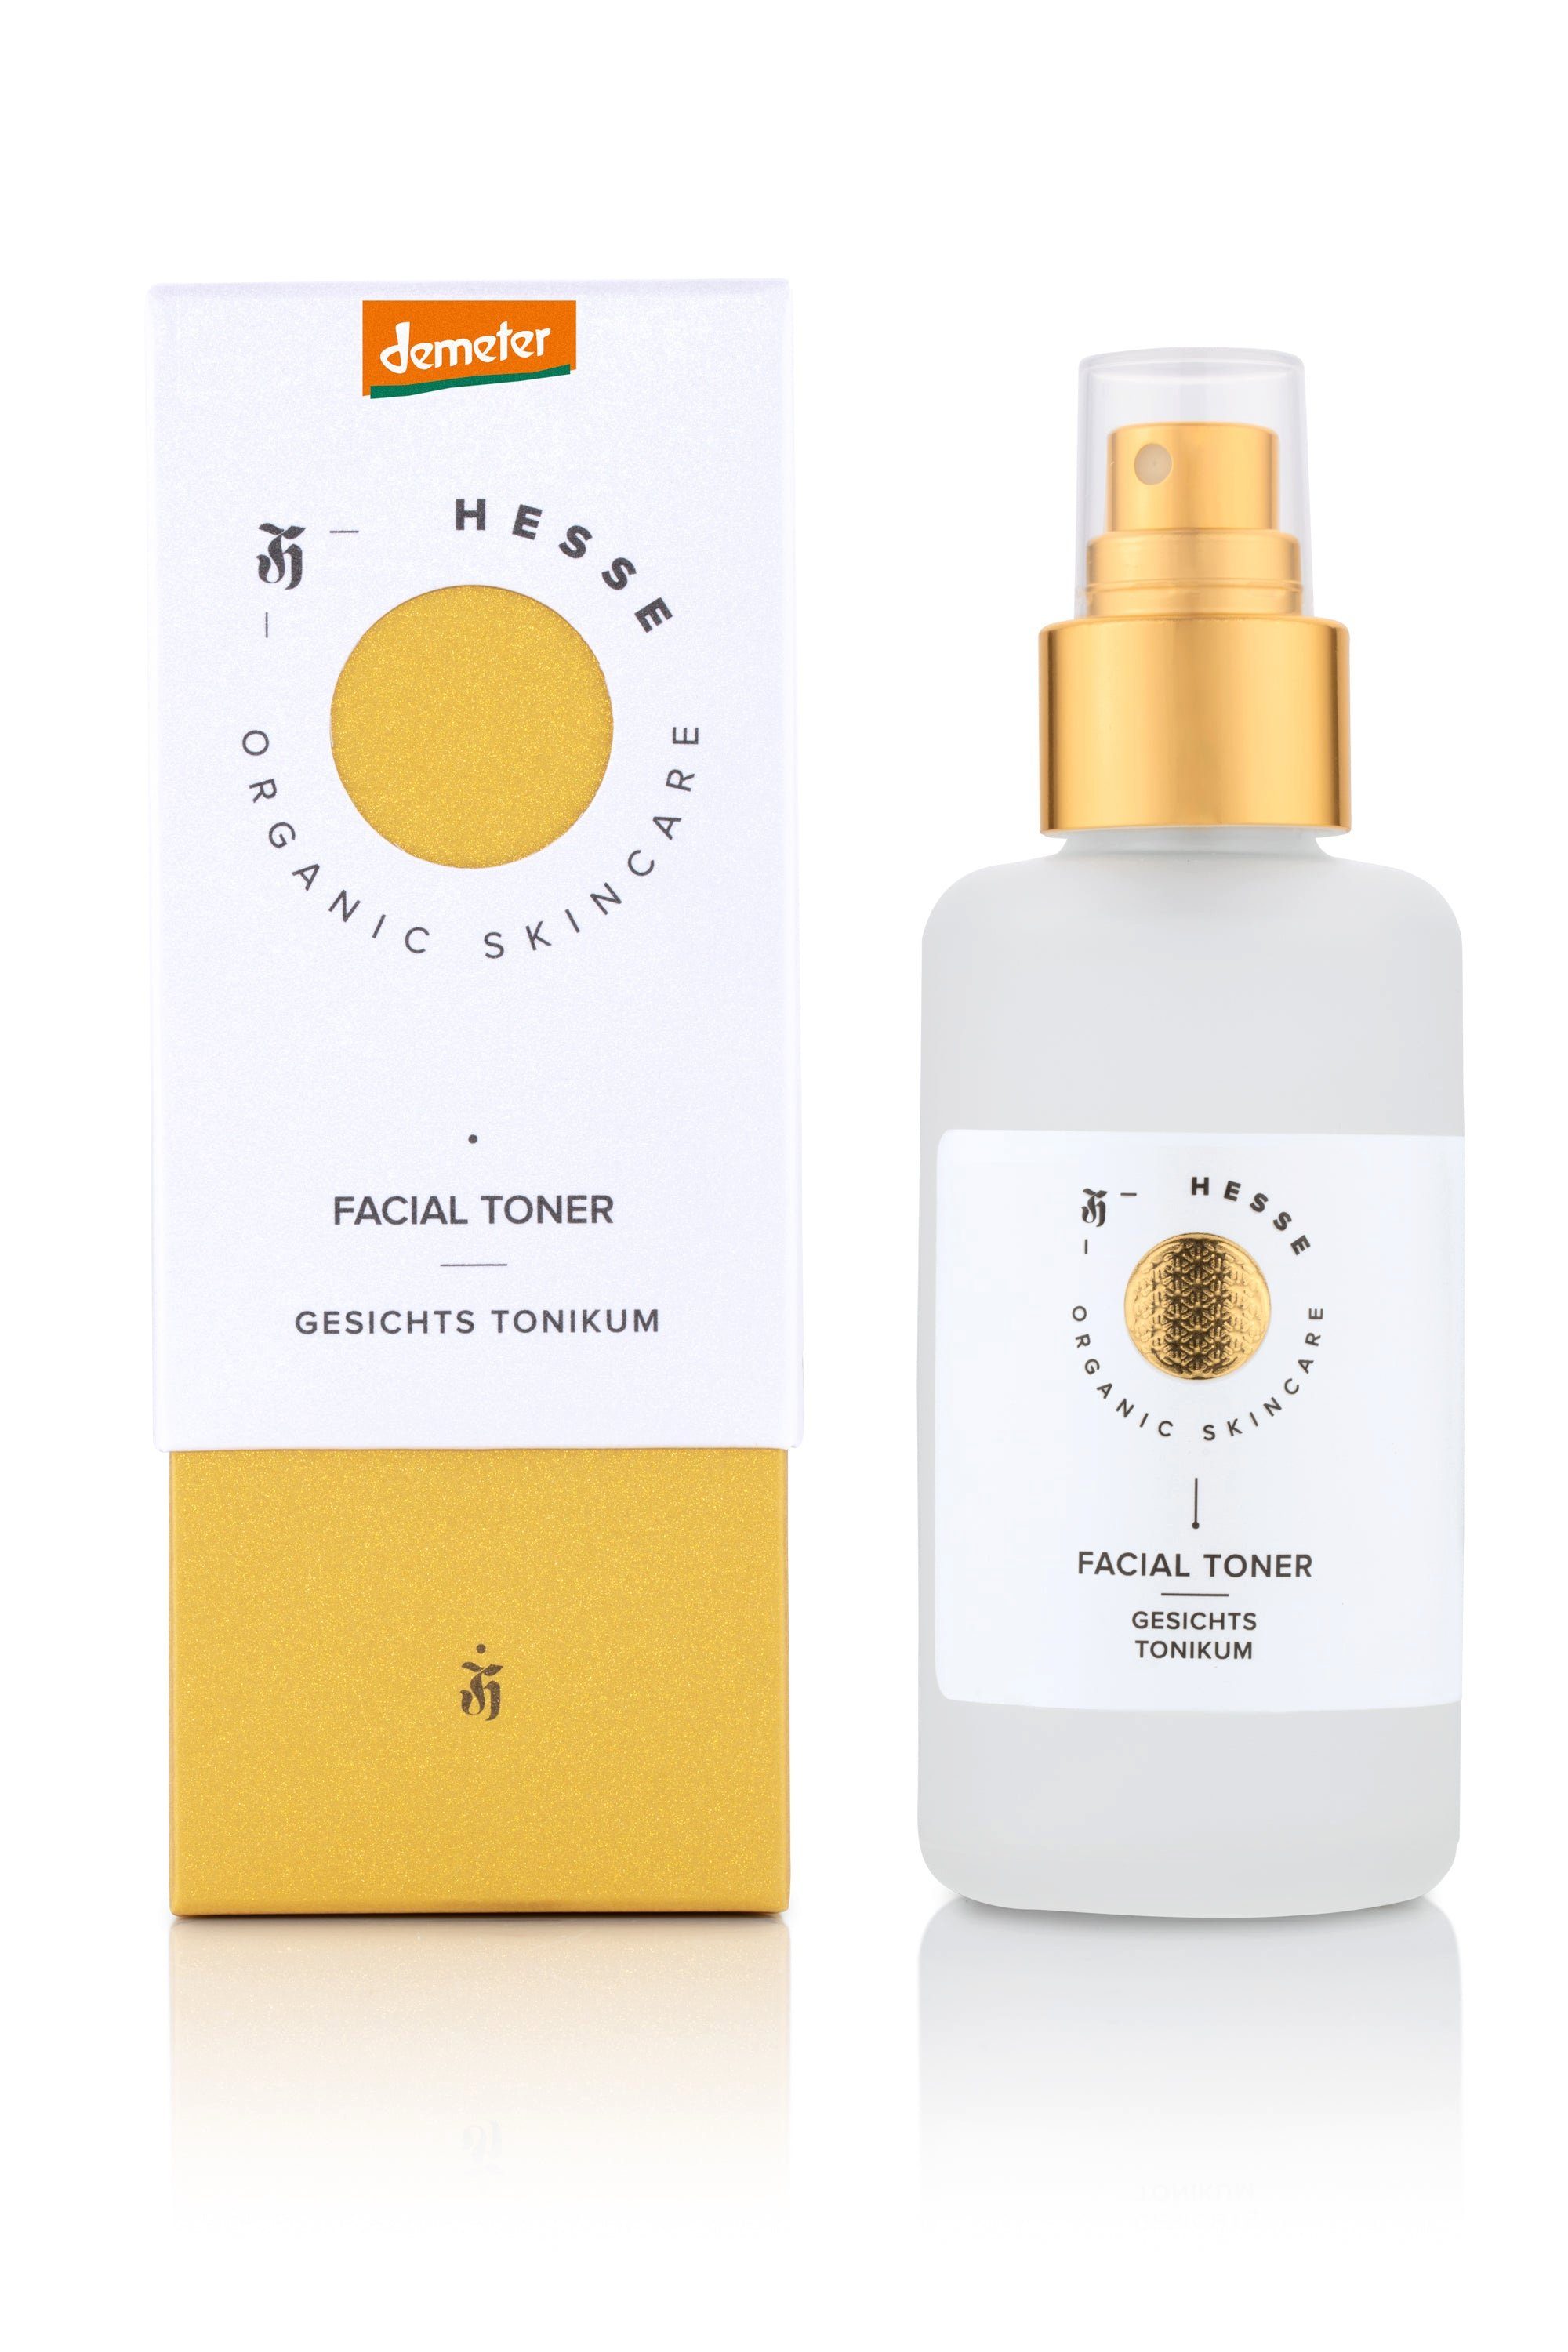 Hesse Organic Skincare Gesichtswasser FACIAL TONER – GESICHTS TONIKUM